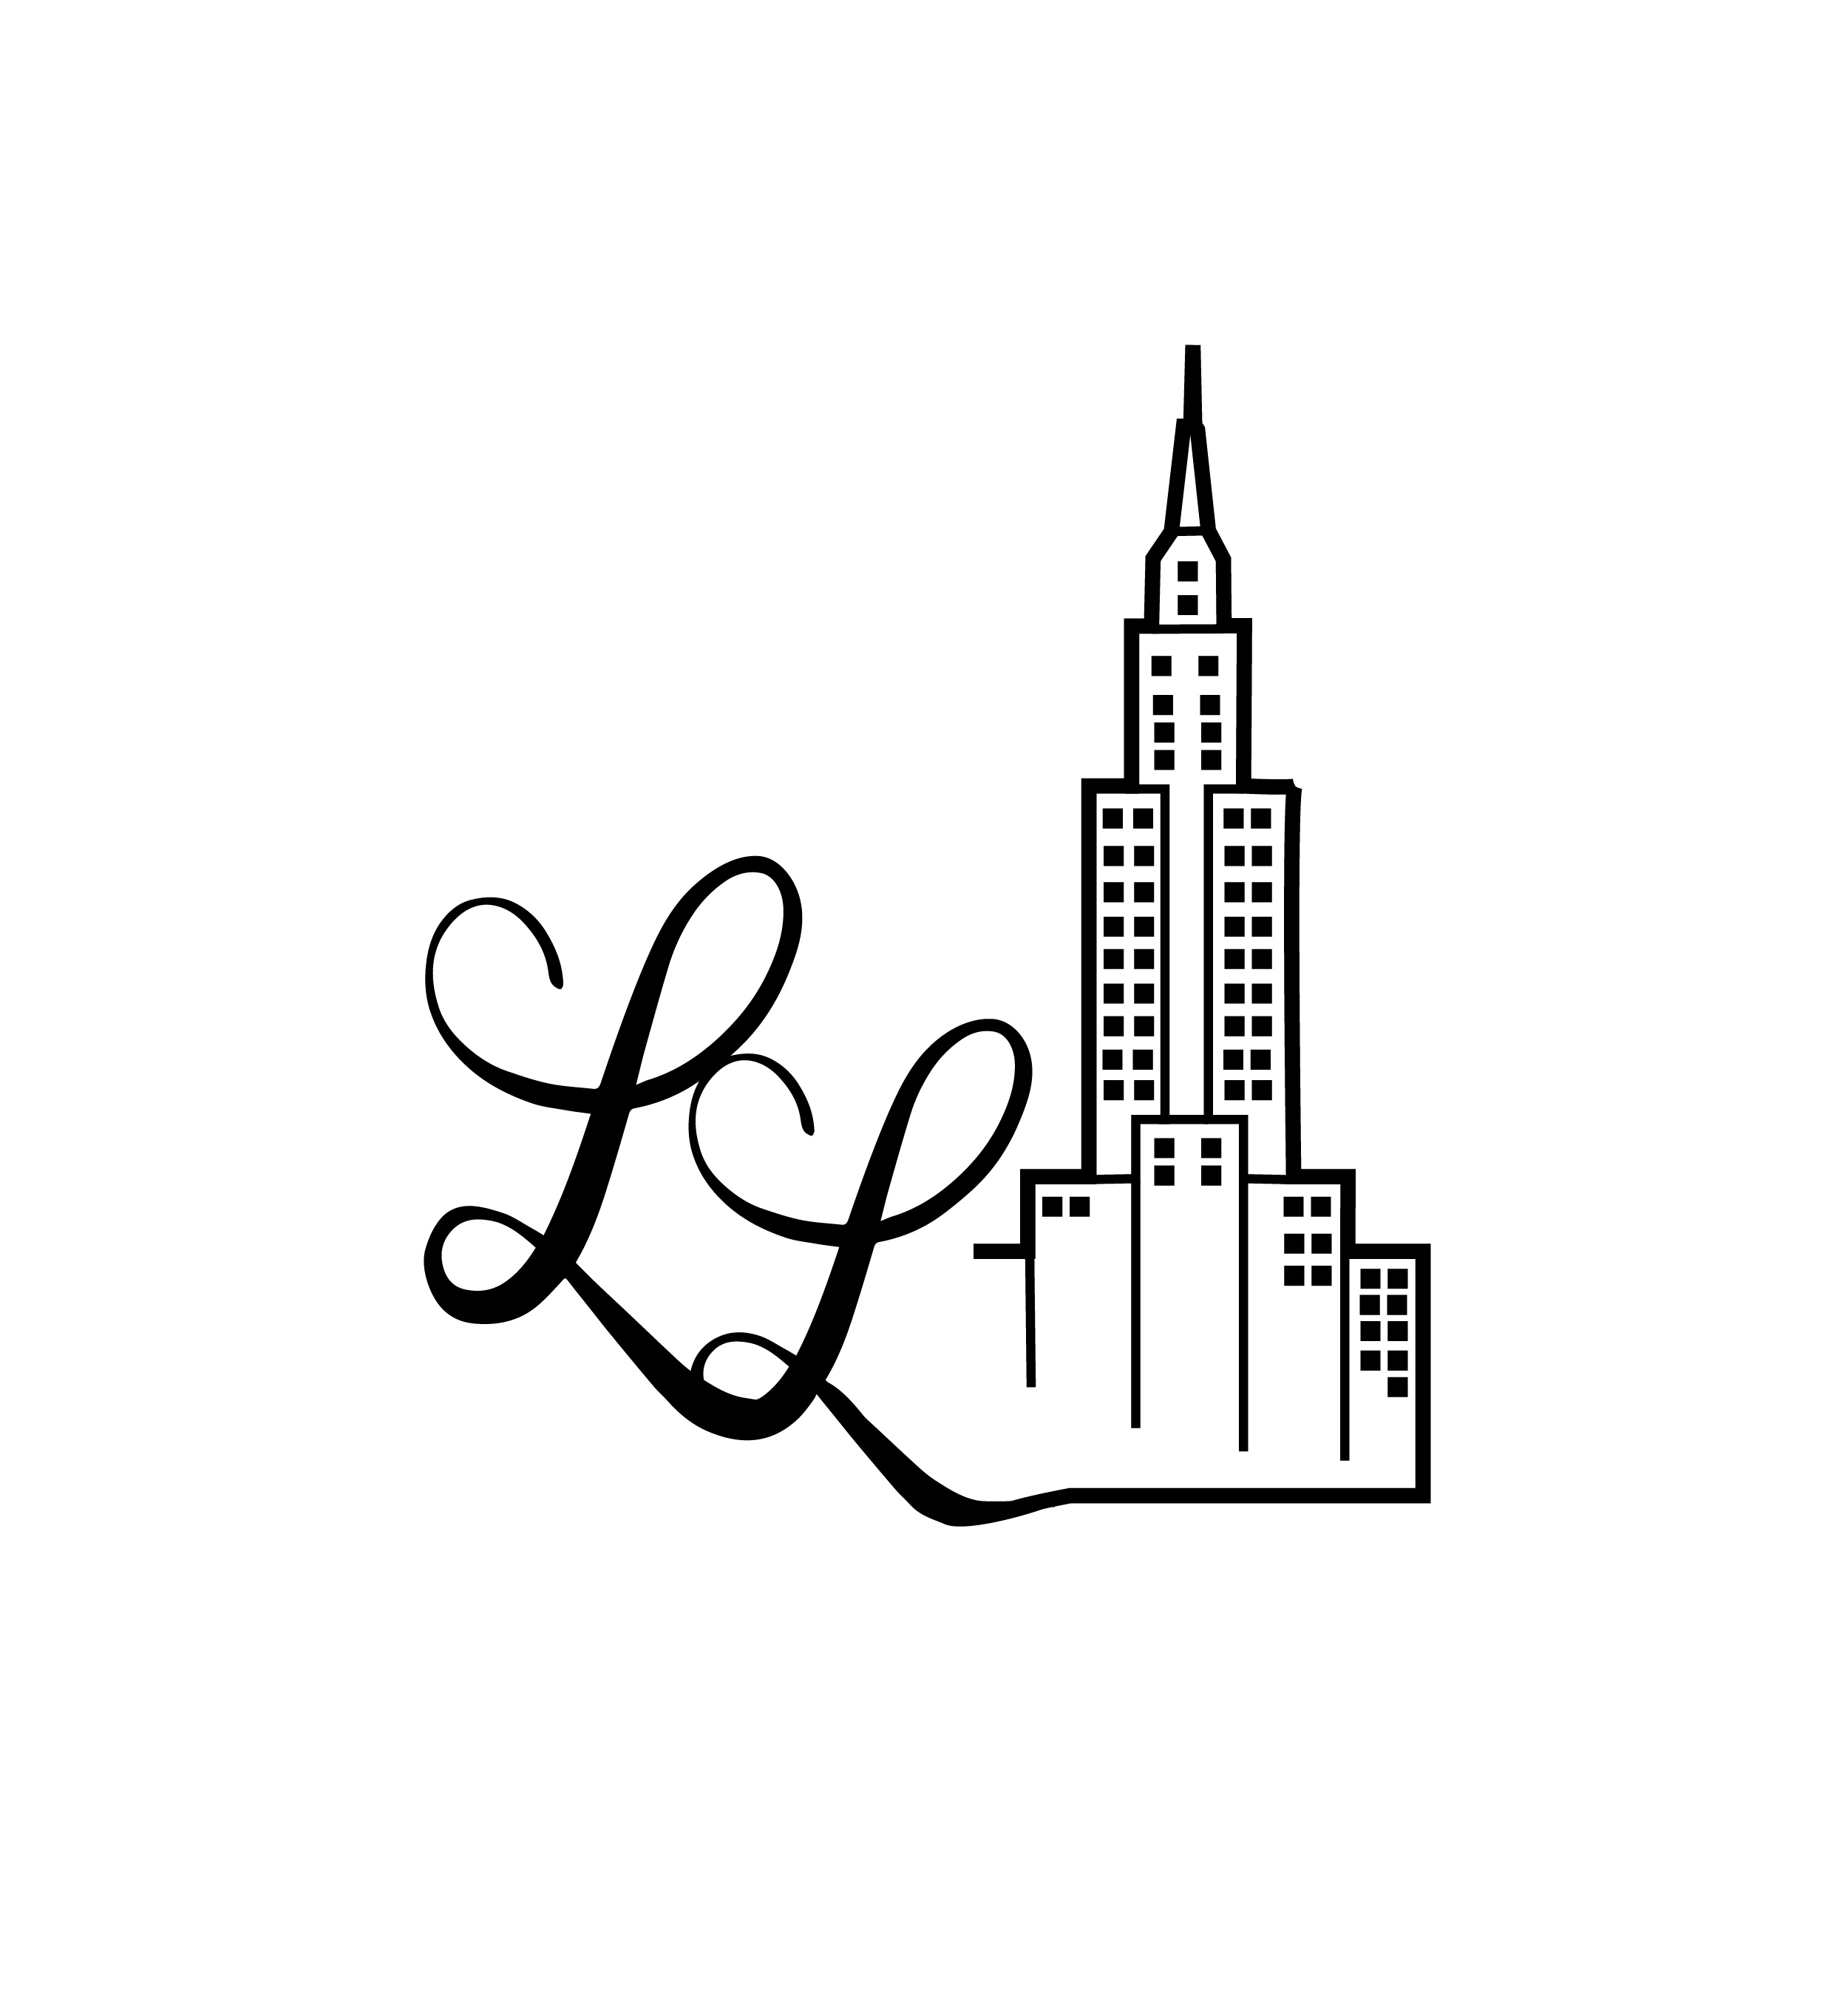 Lancey Leon Designs Logo